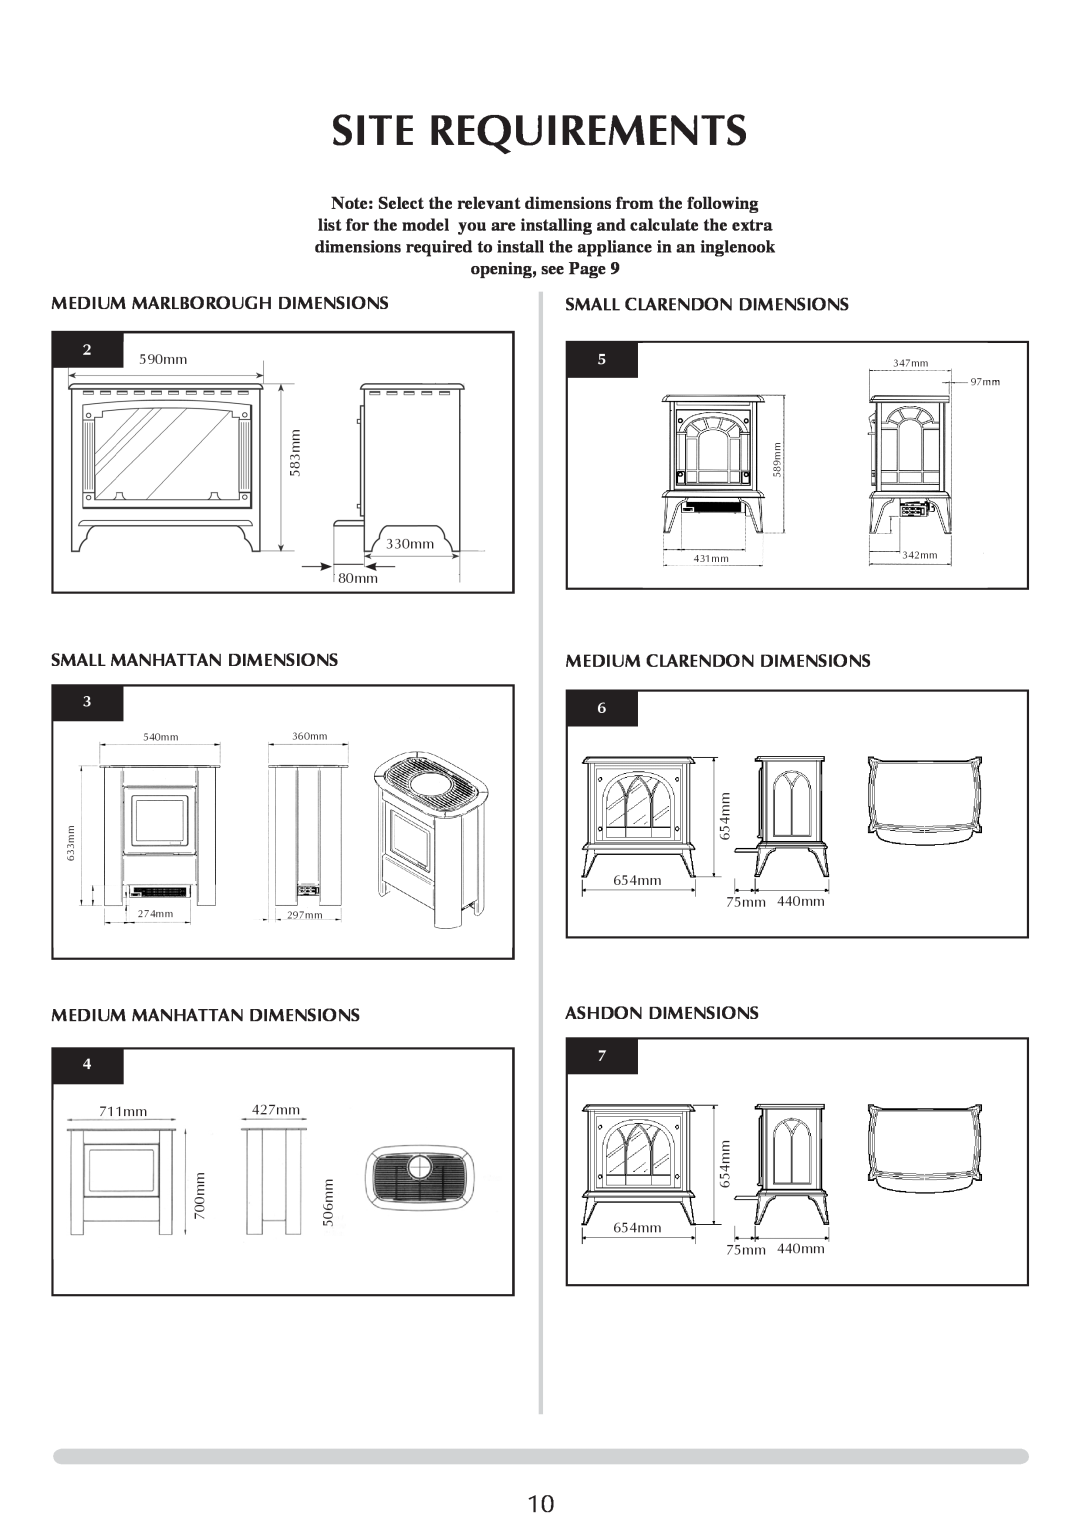 Stovax Electric Stove Range manual Site Requirements, Medium Marlborough Dimensions, Small Manhattan Dimensions 